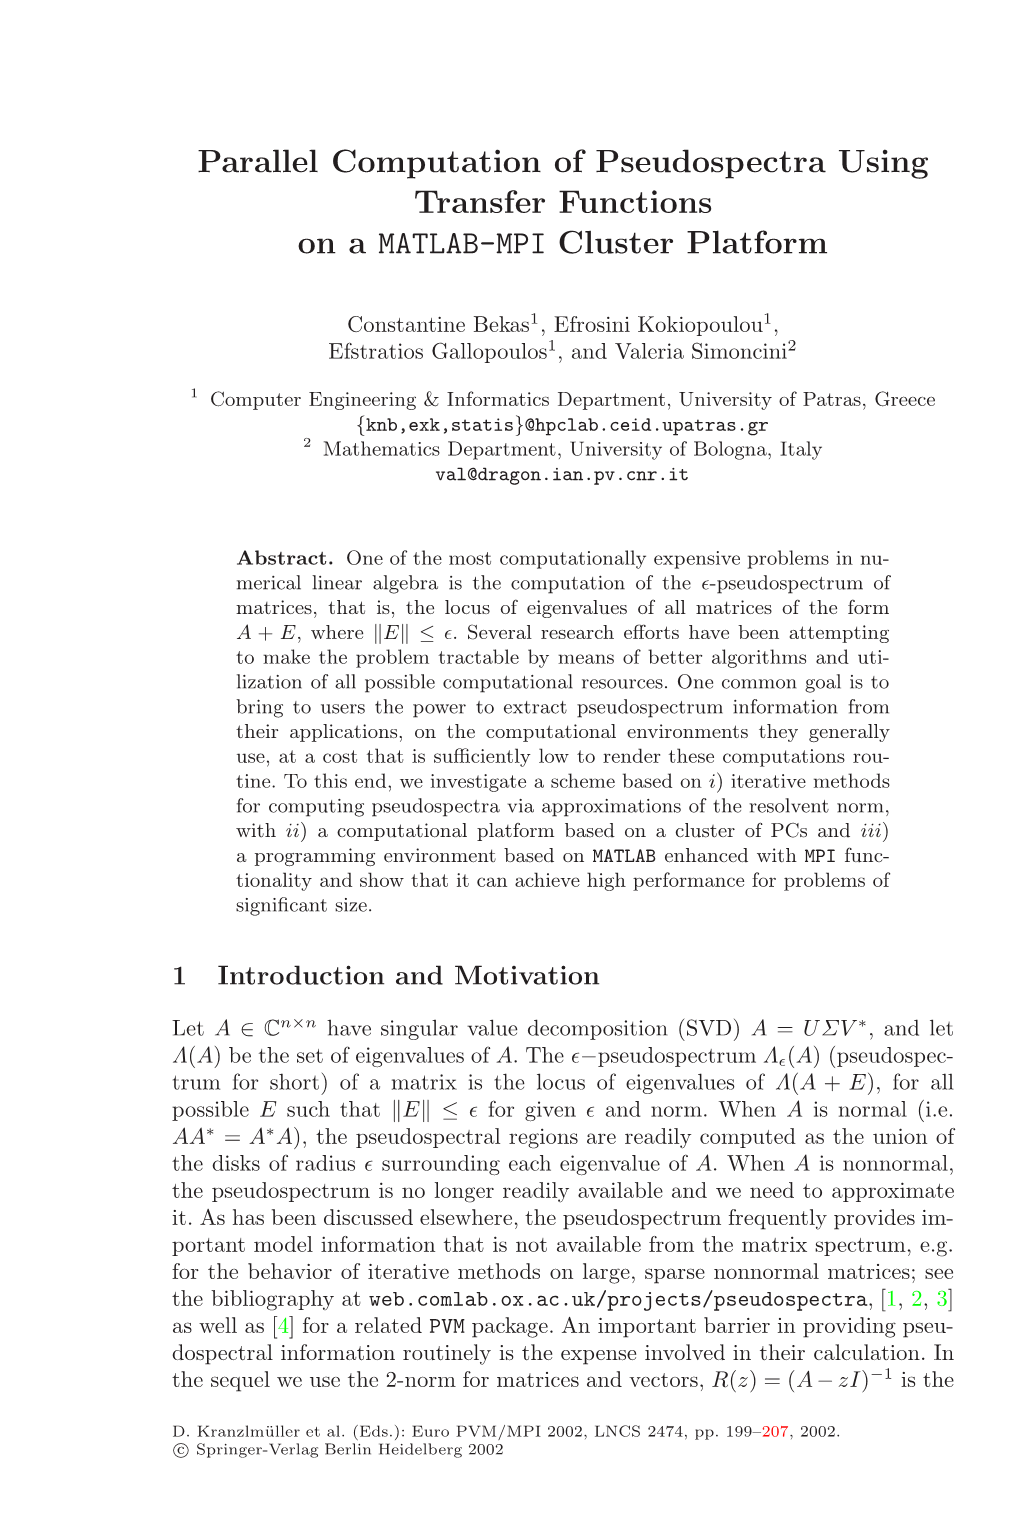 Parallel Computation of Pseudospectra Using Transfer Functions on a MATLAB-MPI Cluster Platform